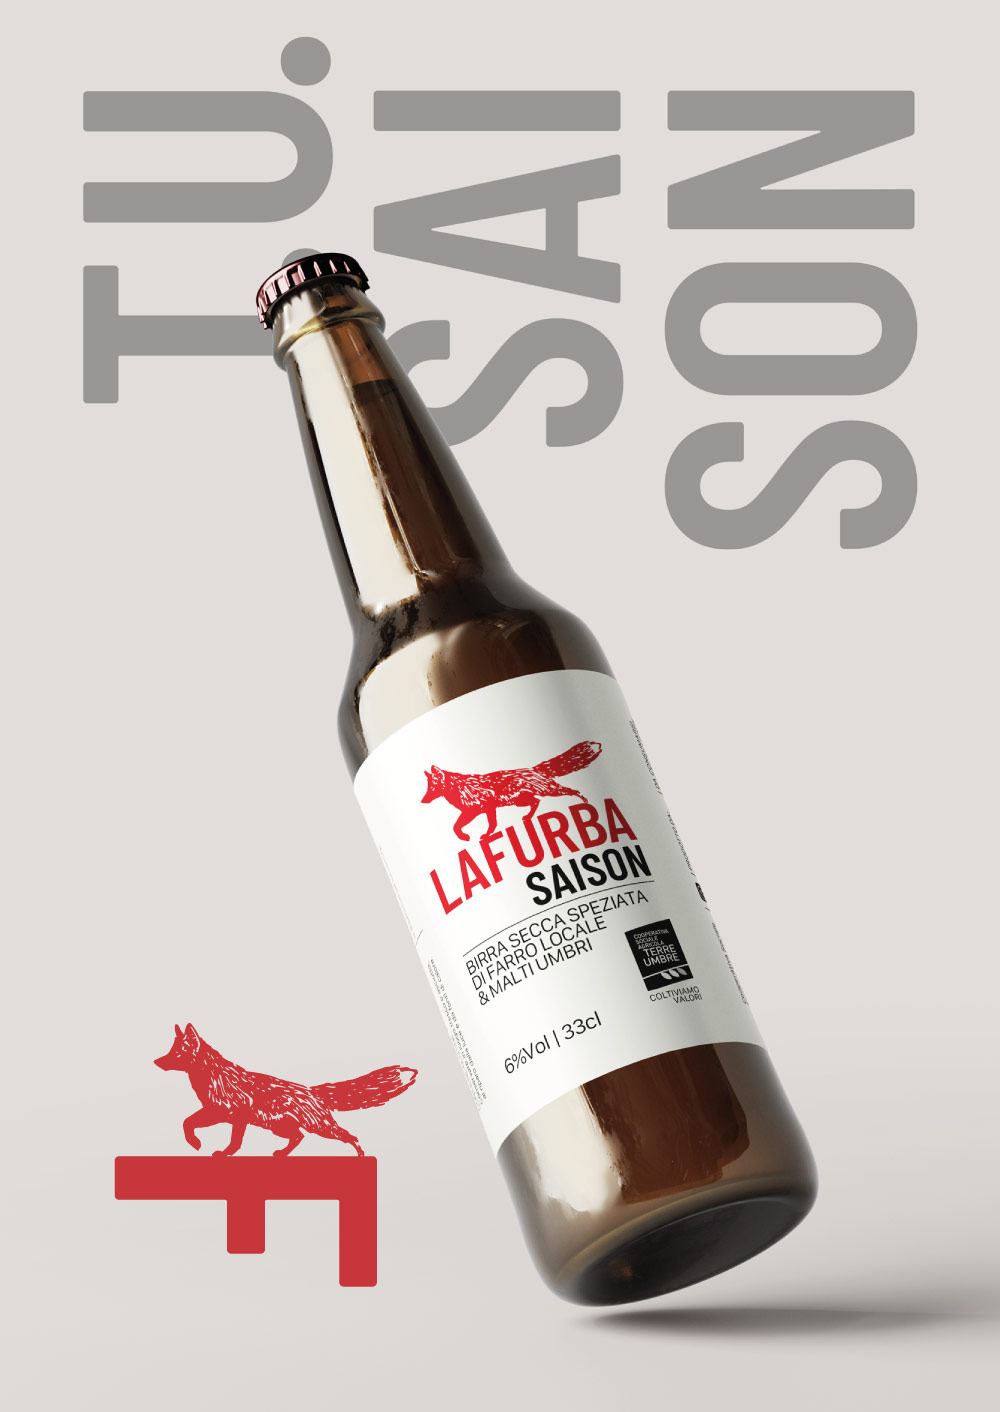 Packaging design - birra "La Furba" - Cooperativa Sociale Terre Umbre